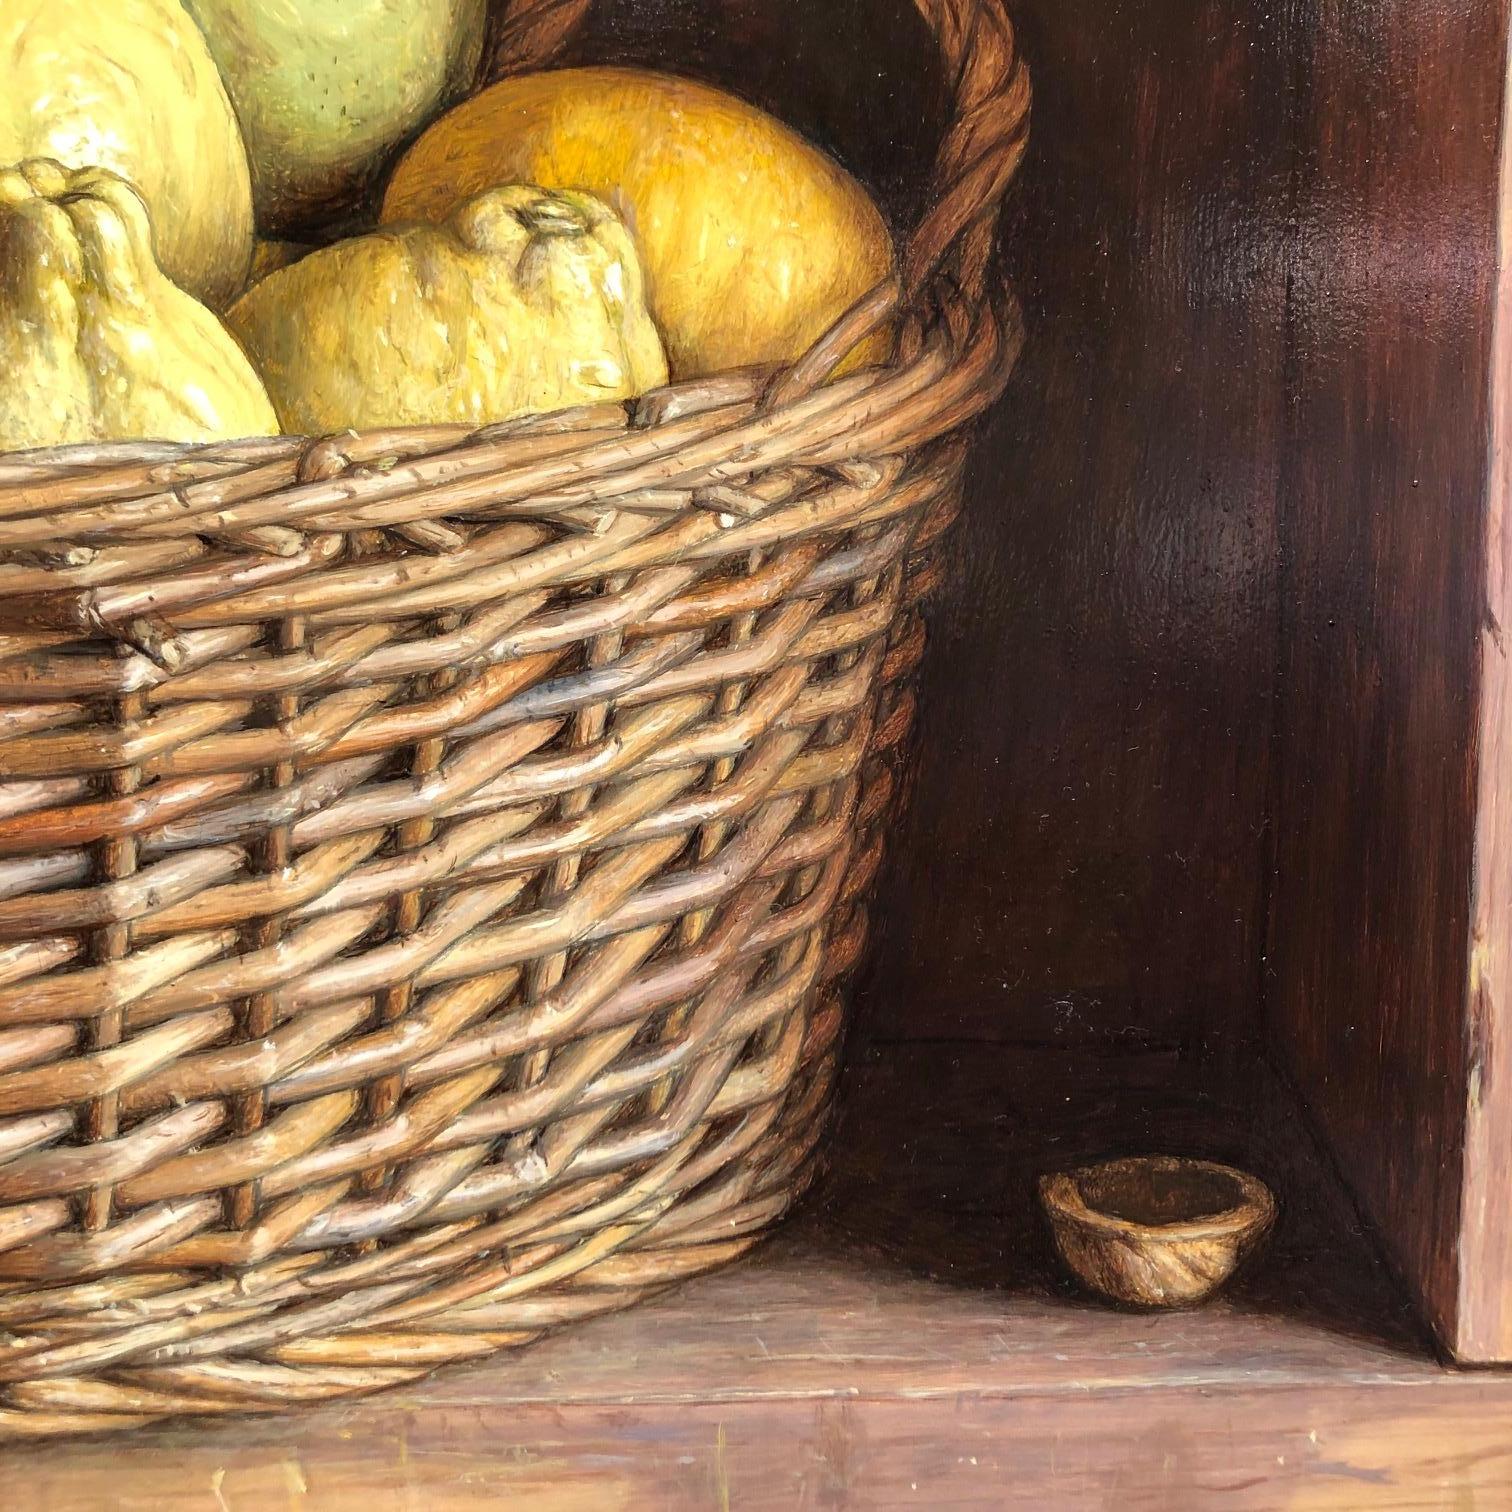 Contemporary Still Life in a cabinet 'Basket of Lemons' by Mark Lijftogt 2